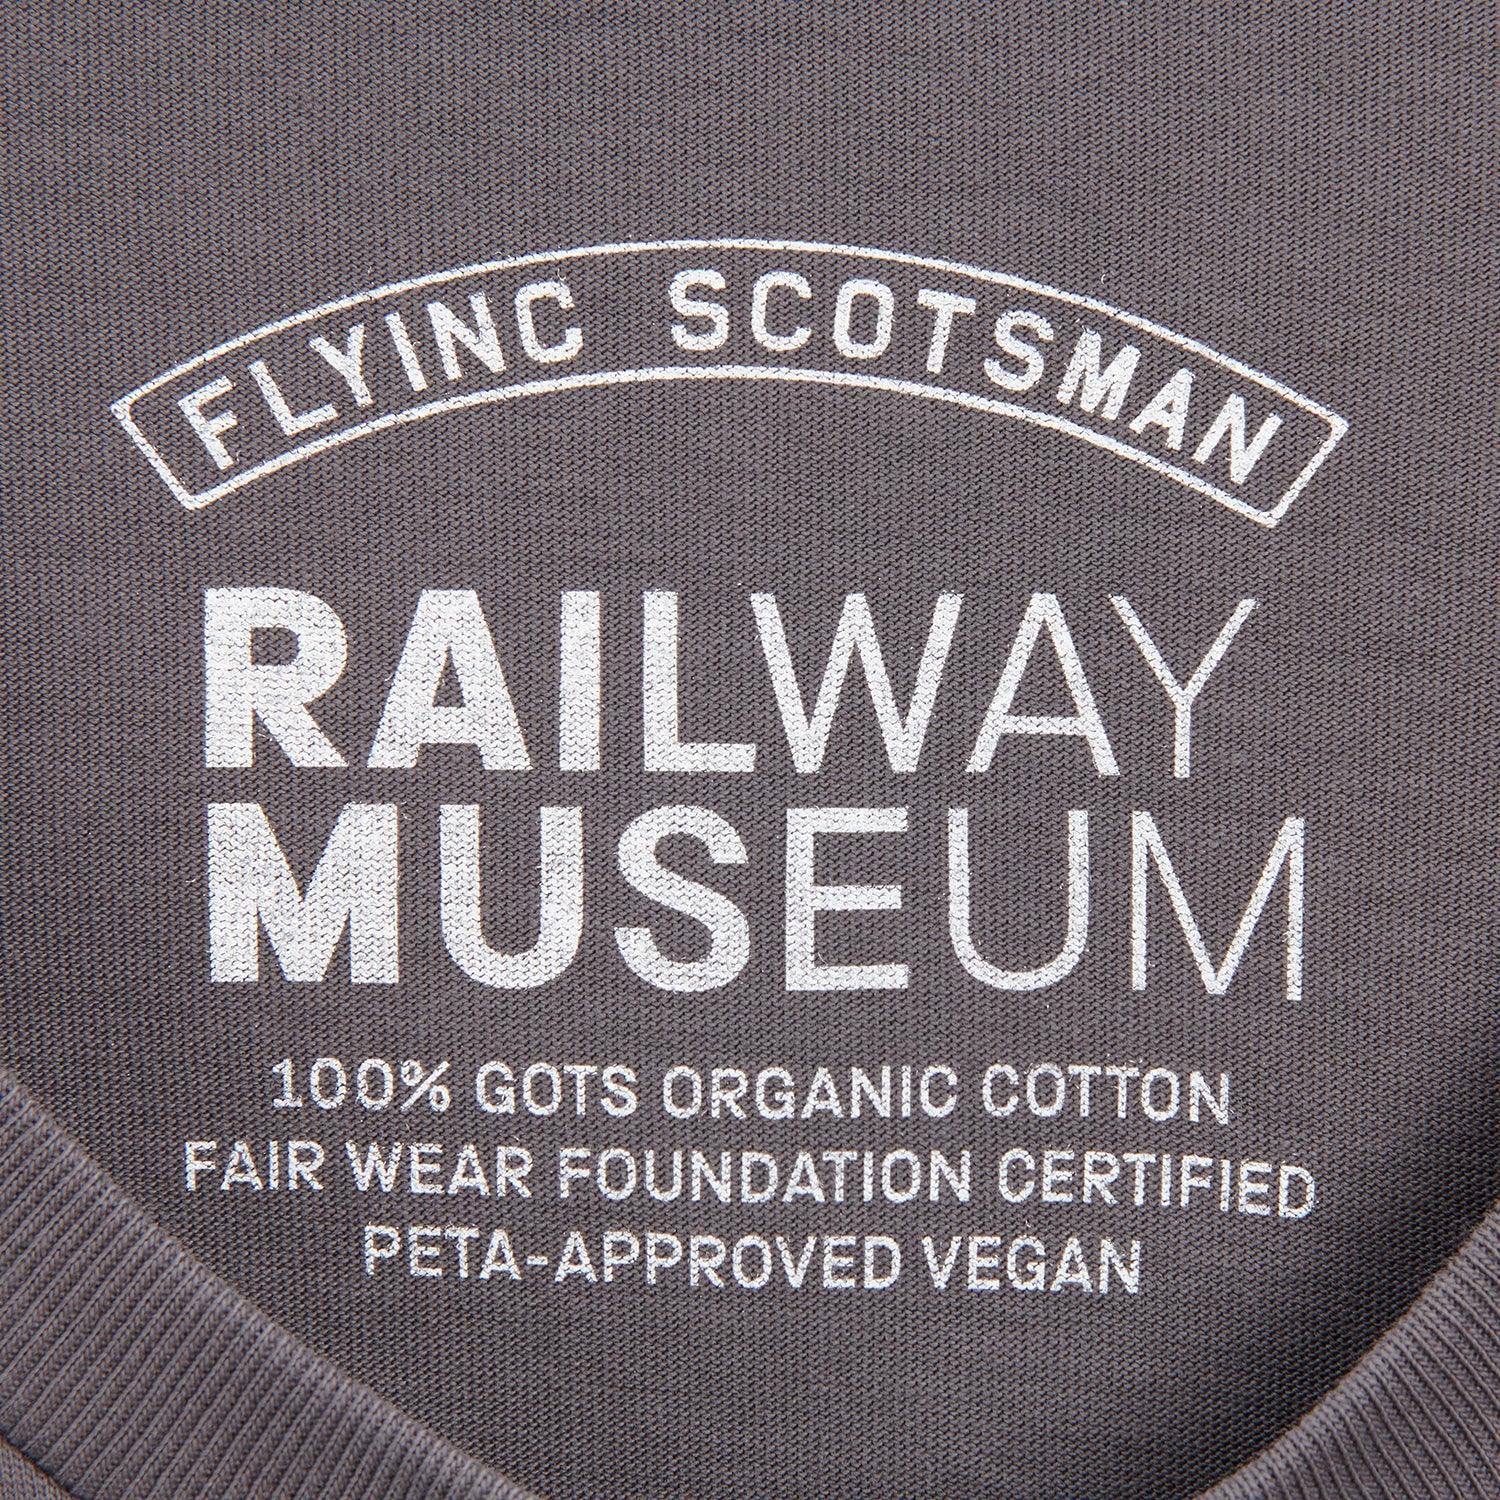 National Railway Museum Flying Scotsman Blueprint T-Shirt - Clothing - Science Museum Shop